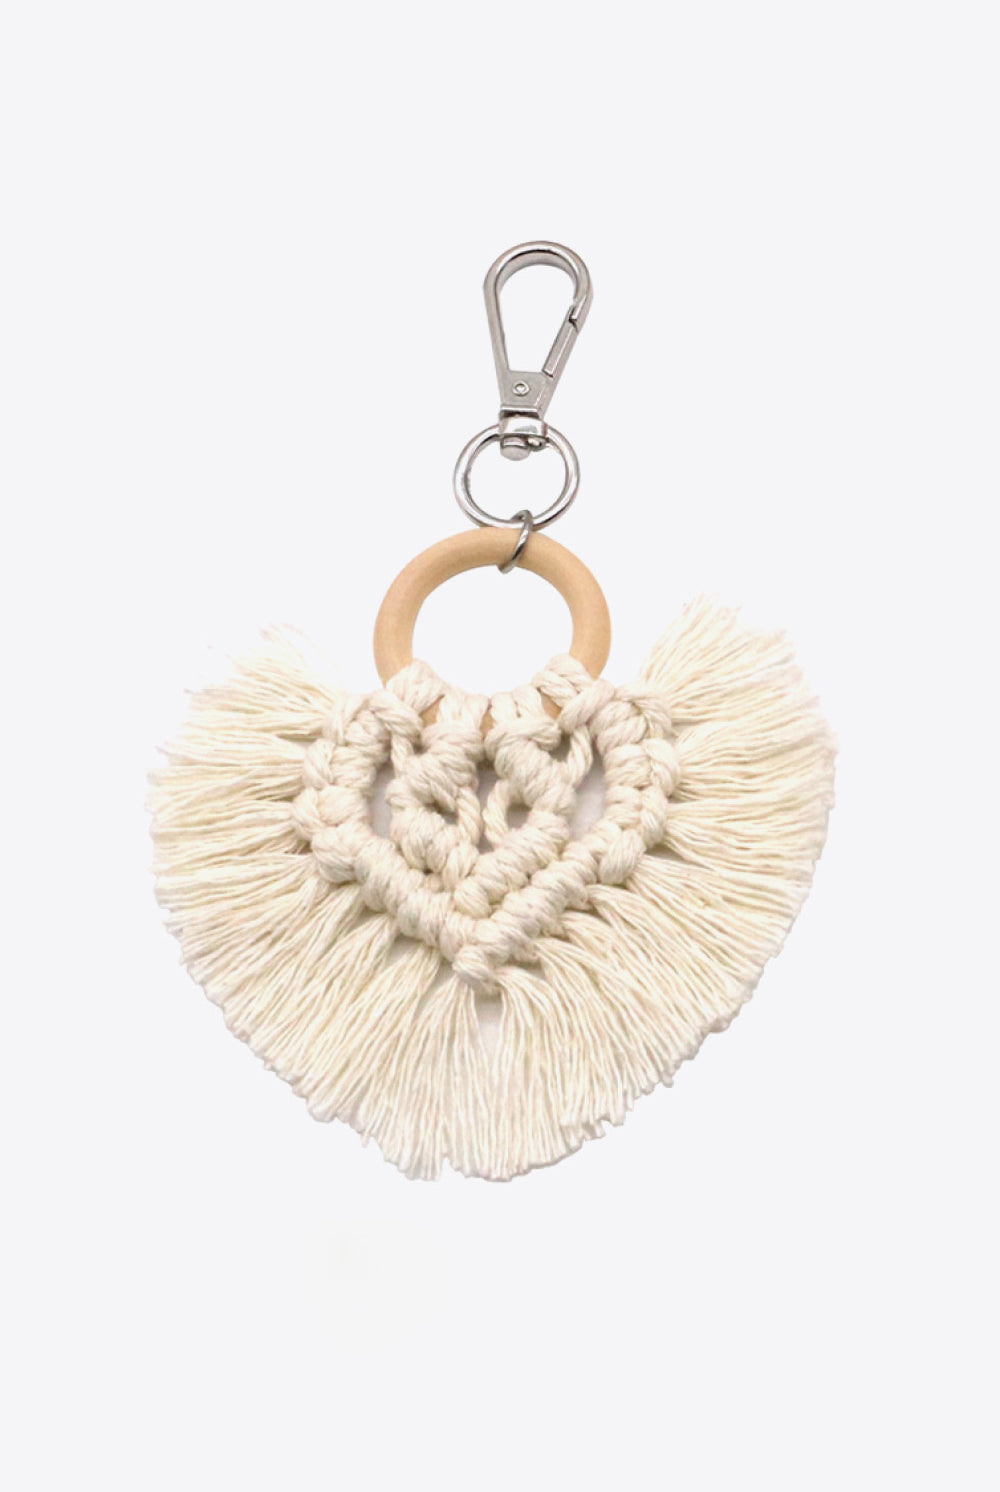 White Smoke Assorted 4-Pack Heart-Shaped Macrame Fringe Keychain Key Chains